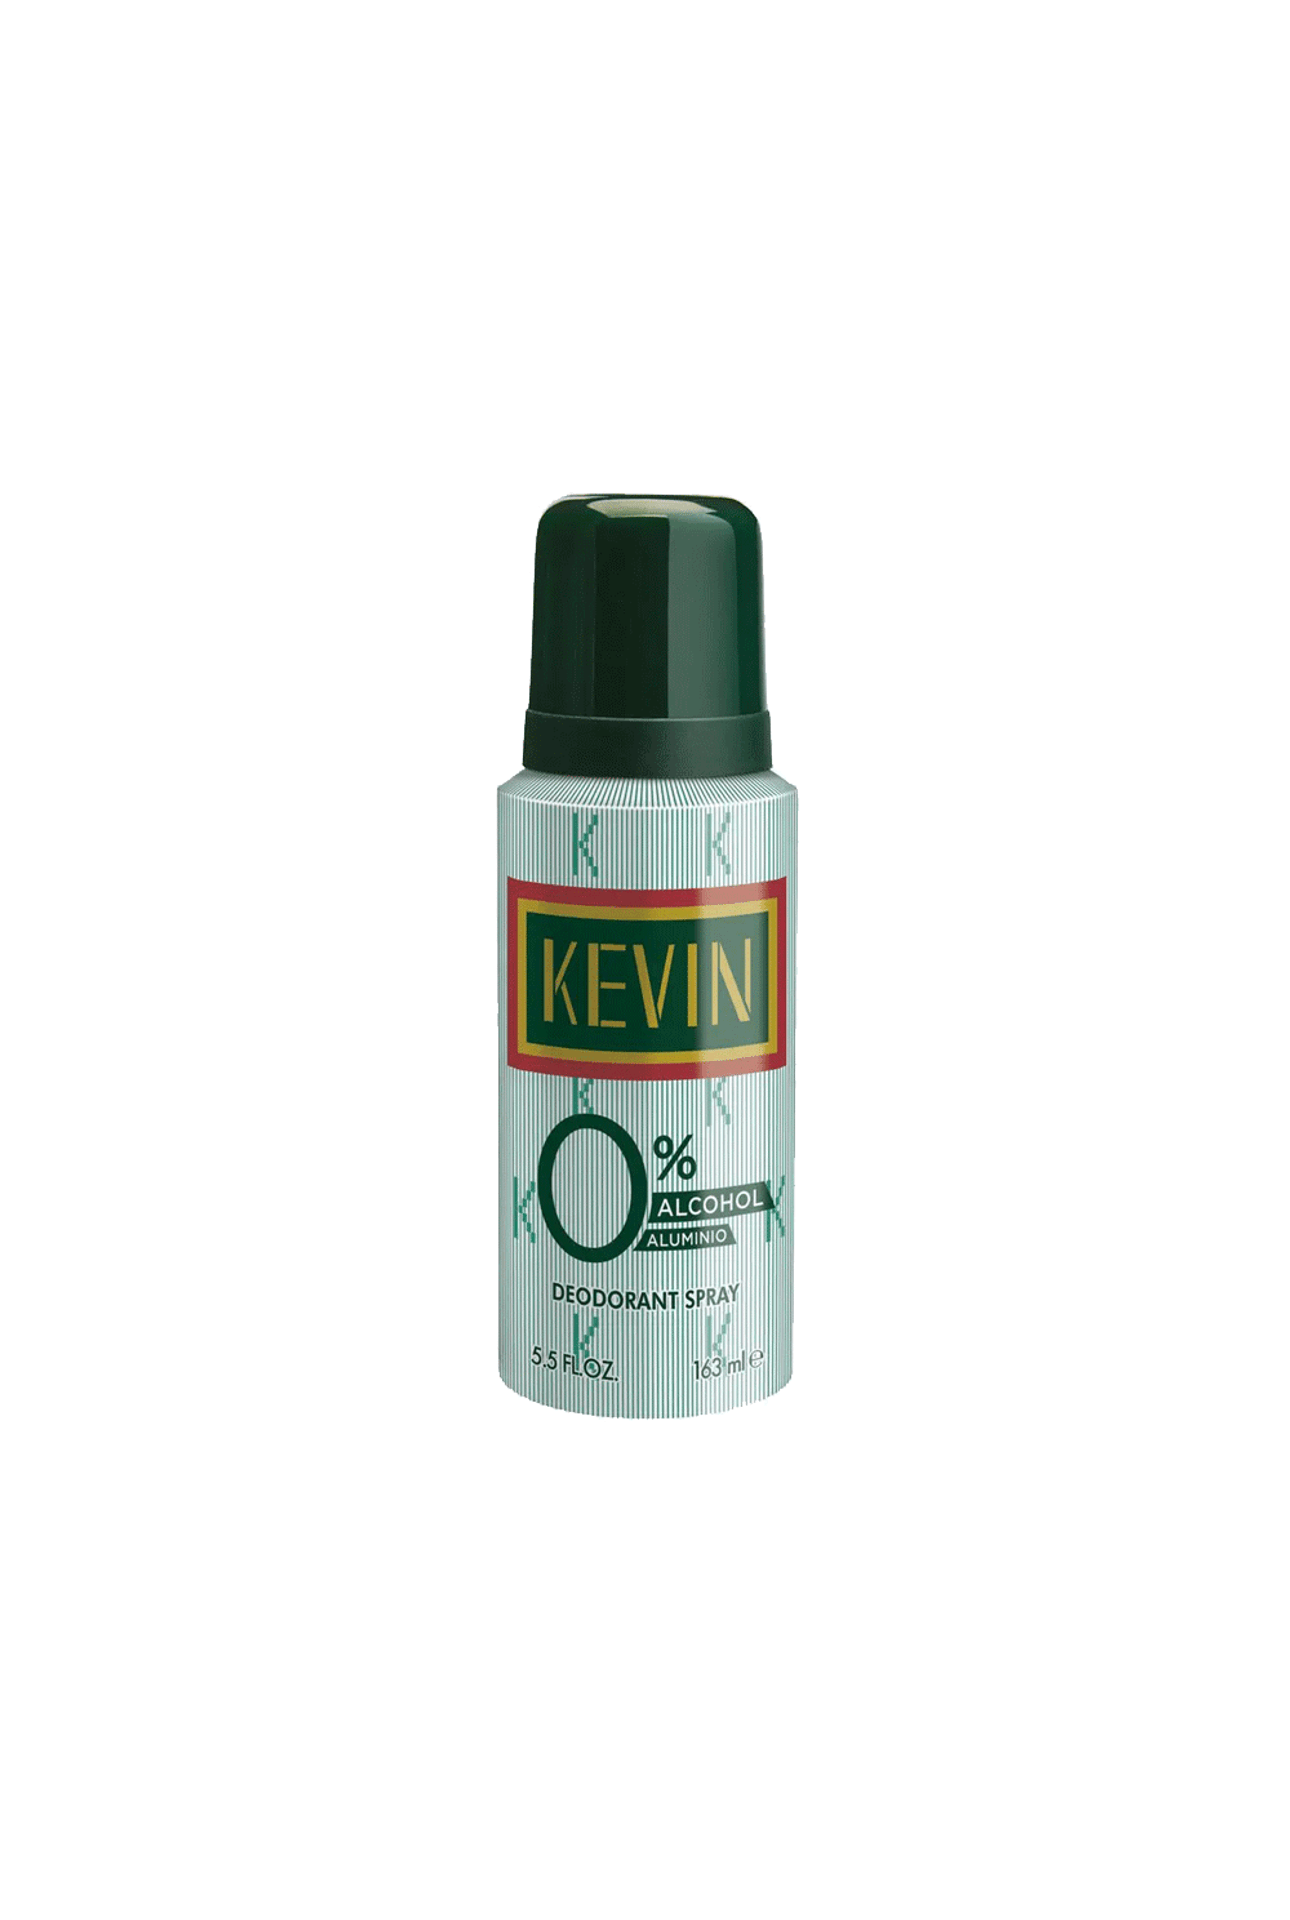 Kevin-Kevin-Desodorante-Antitranspirante-0--Alcohol-x-163-ml-7791600022358_img1